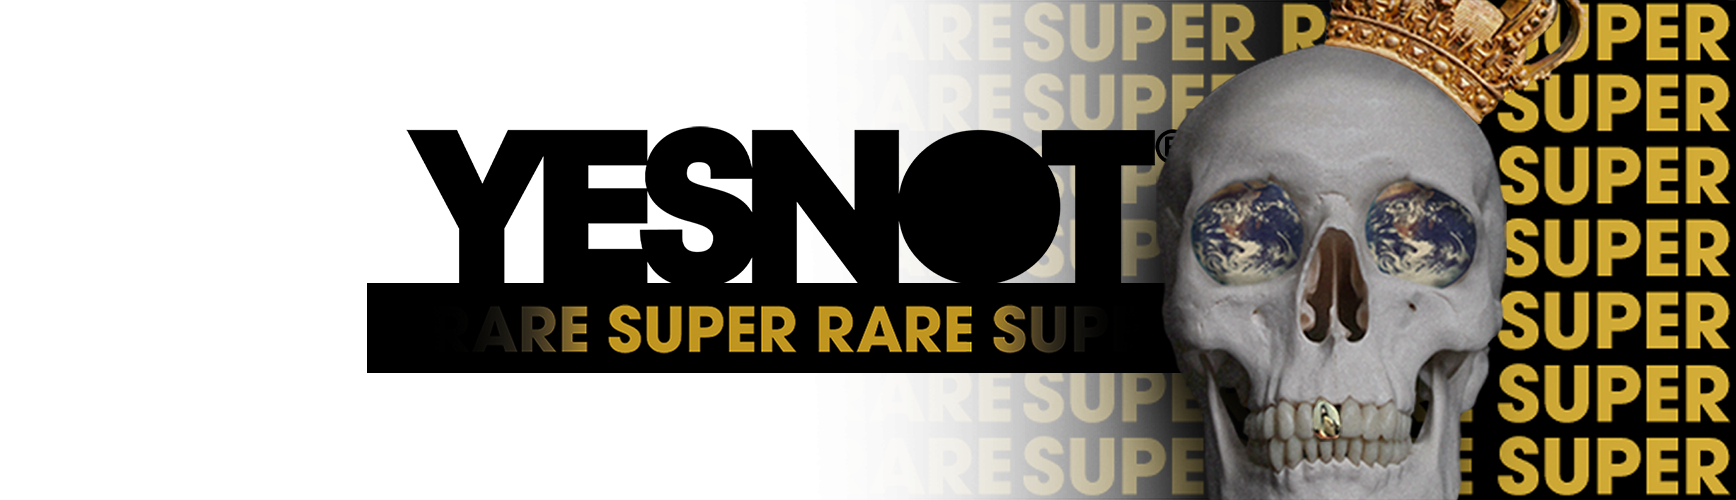 BANNER SUPER RARE 2 corrected 1736x500